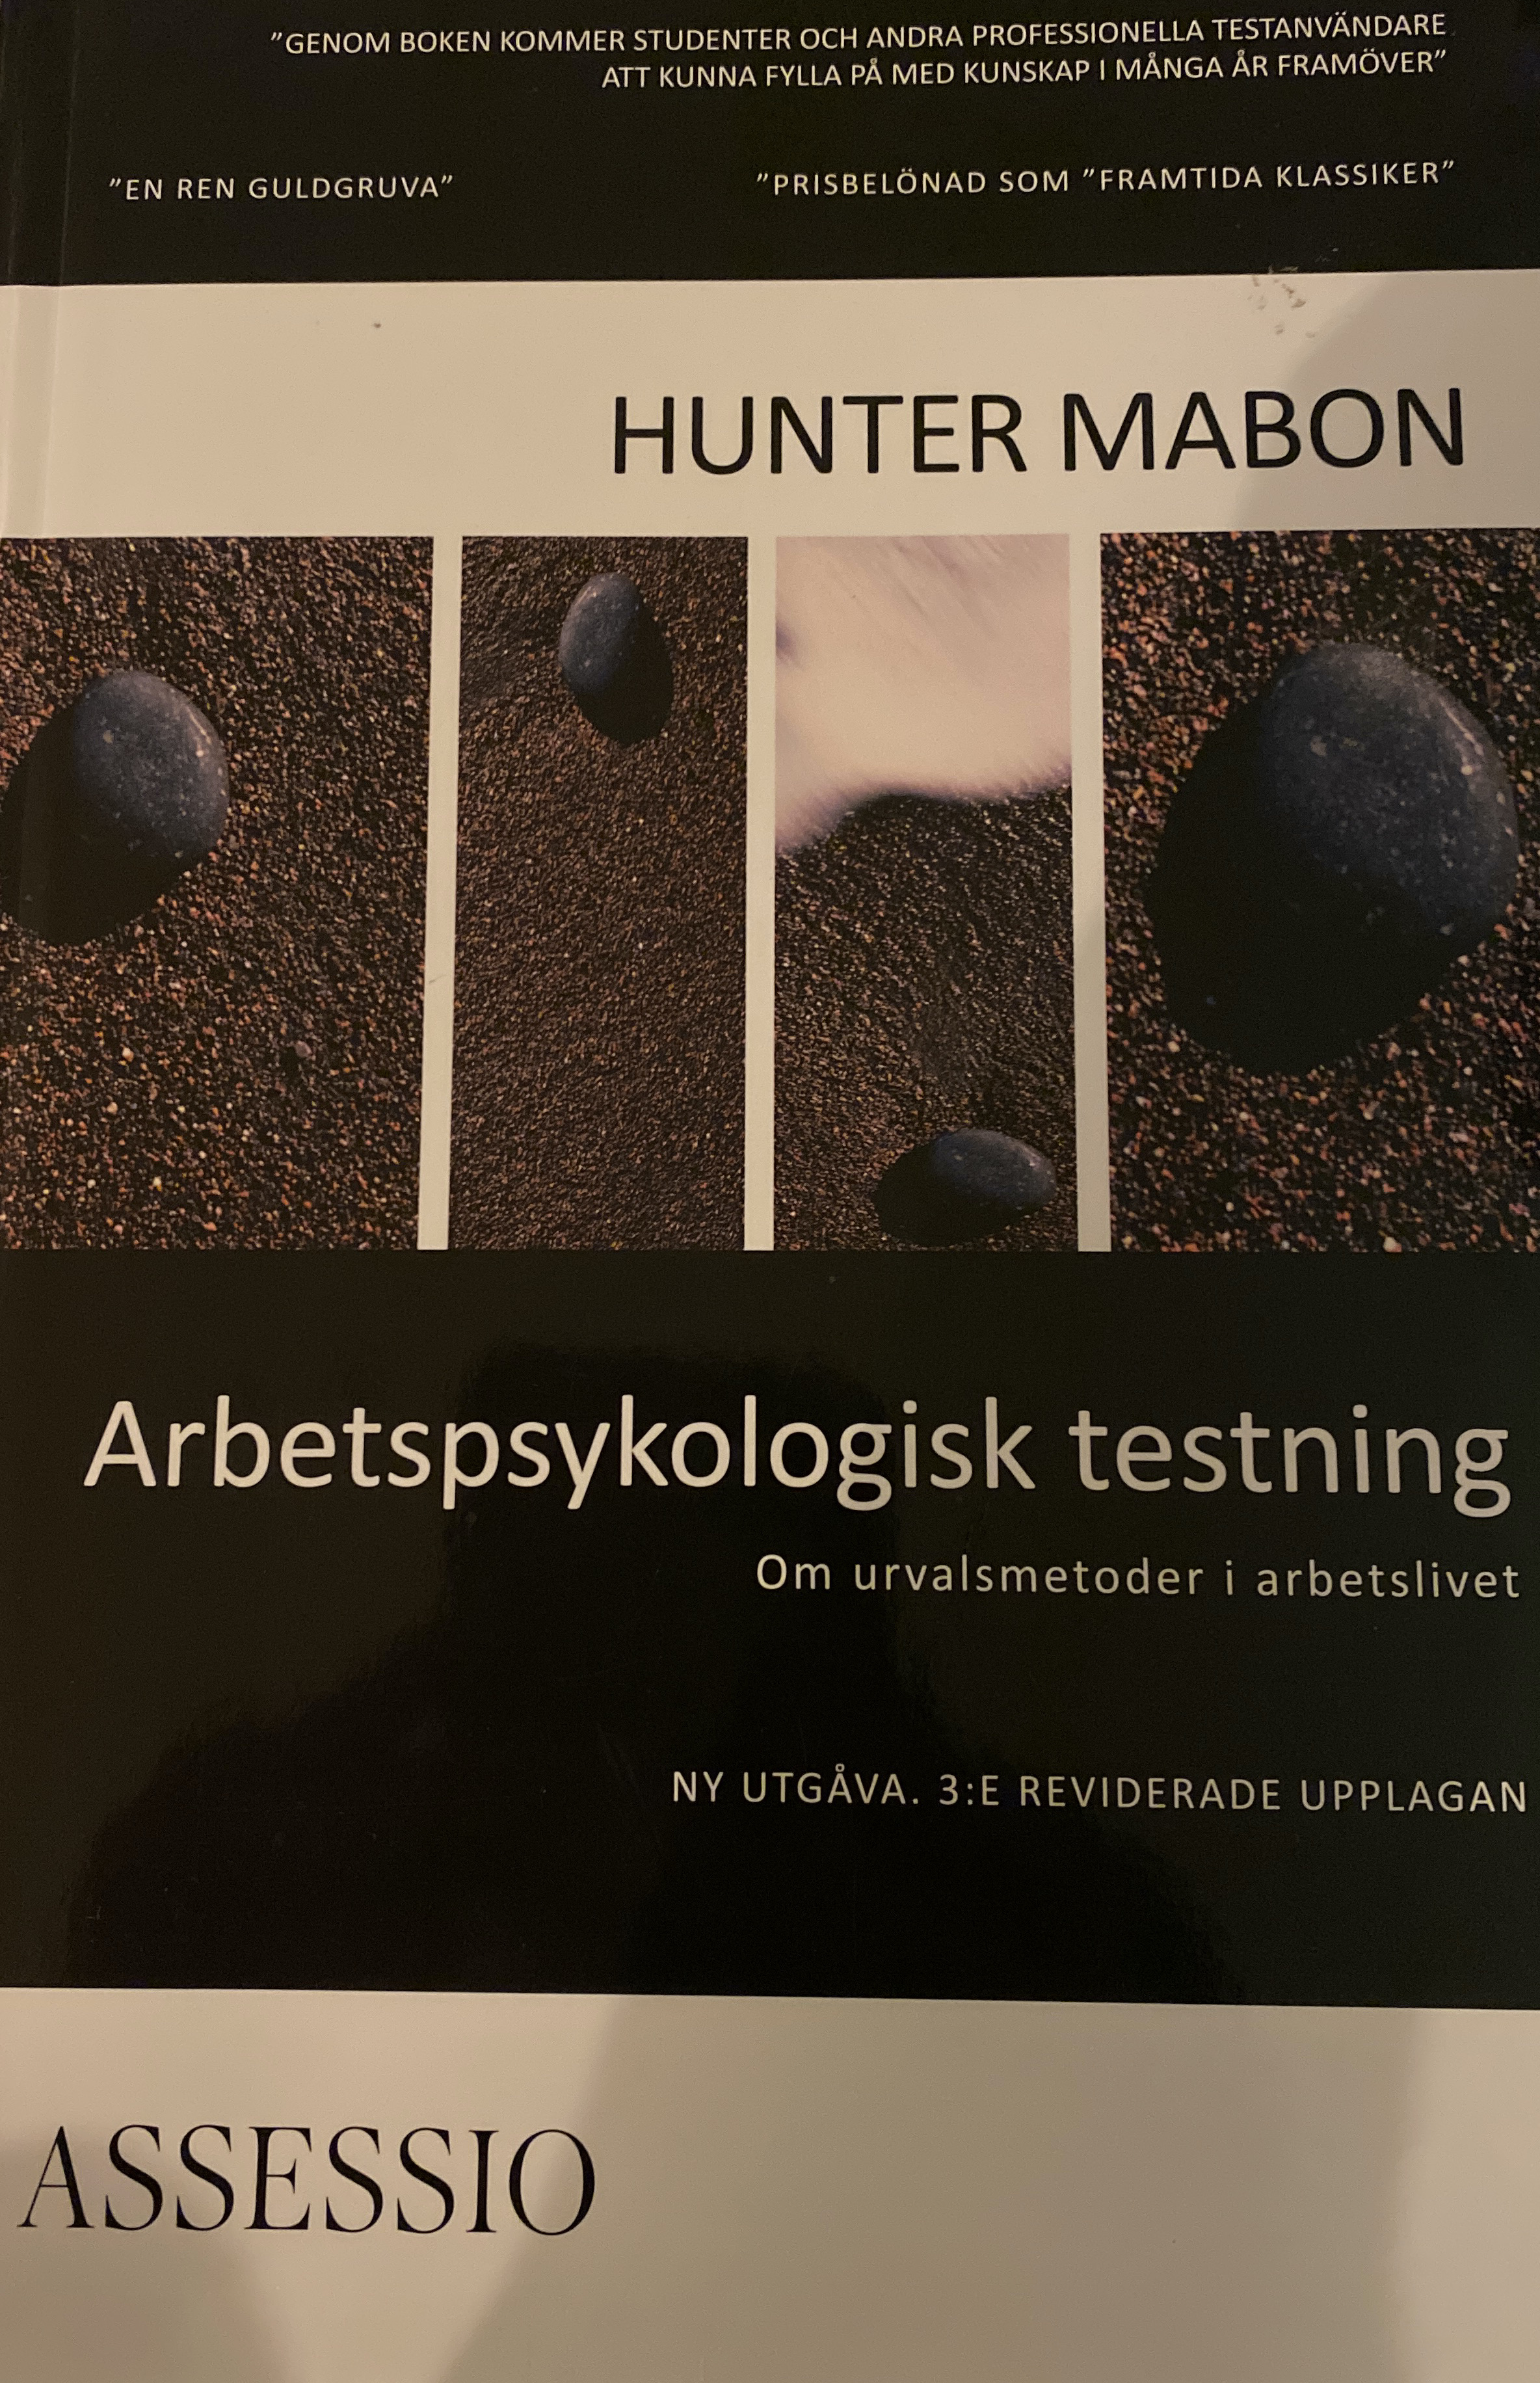 Arbetspsykologisk testning (art nr 778-000); Hunter Mabon; 2014